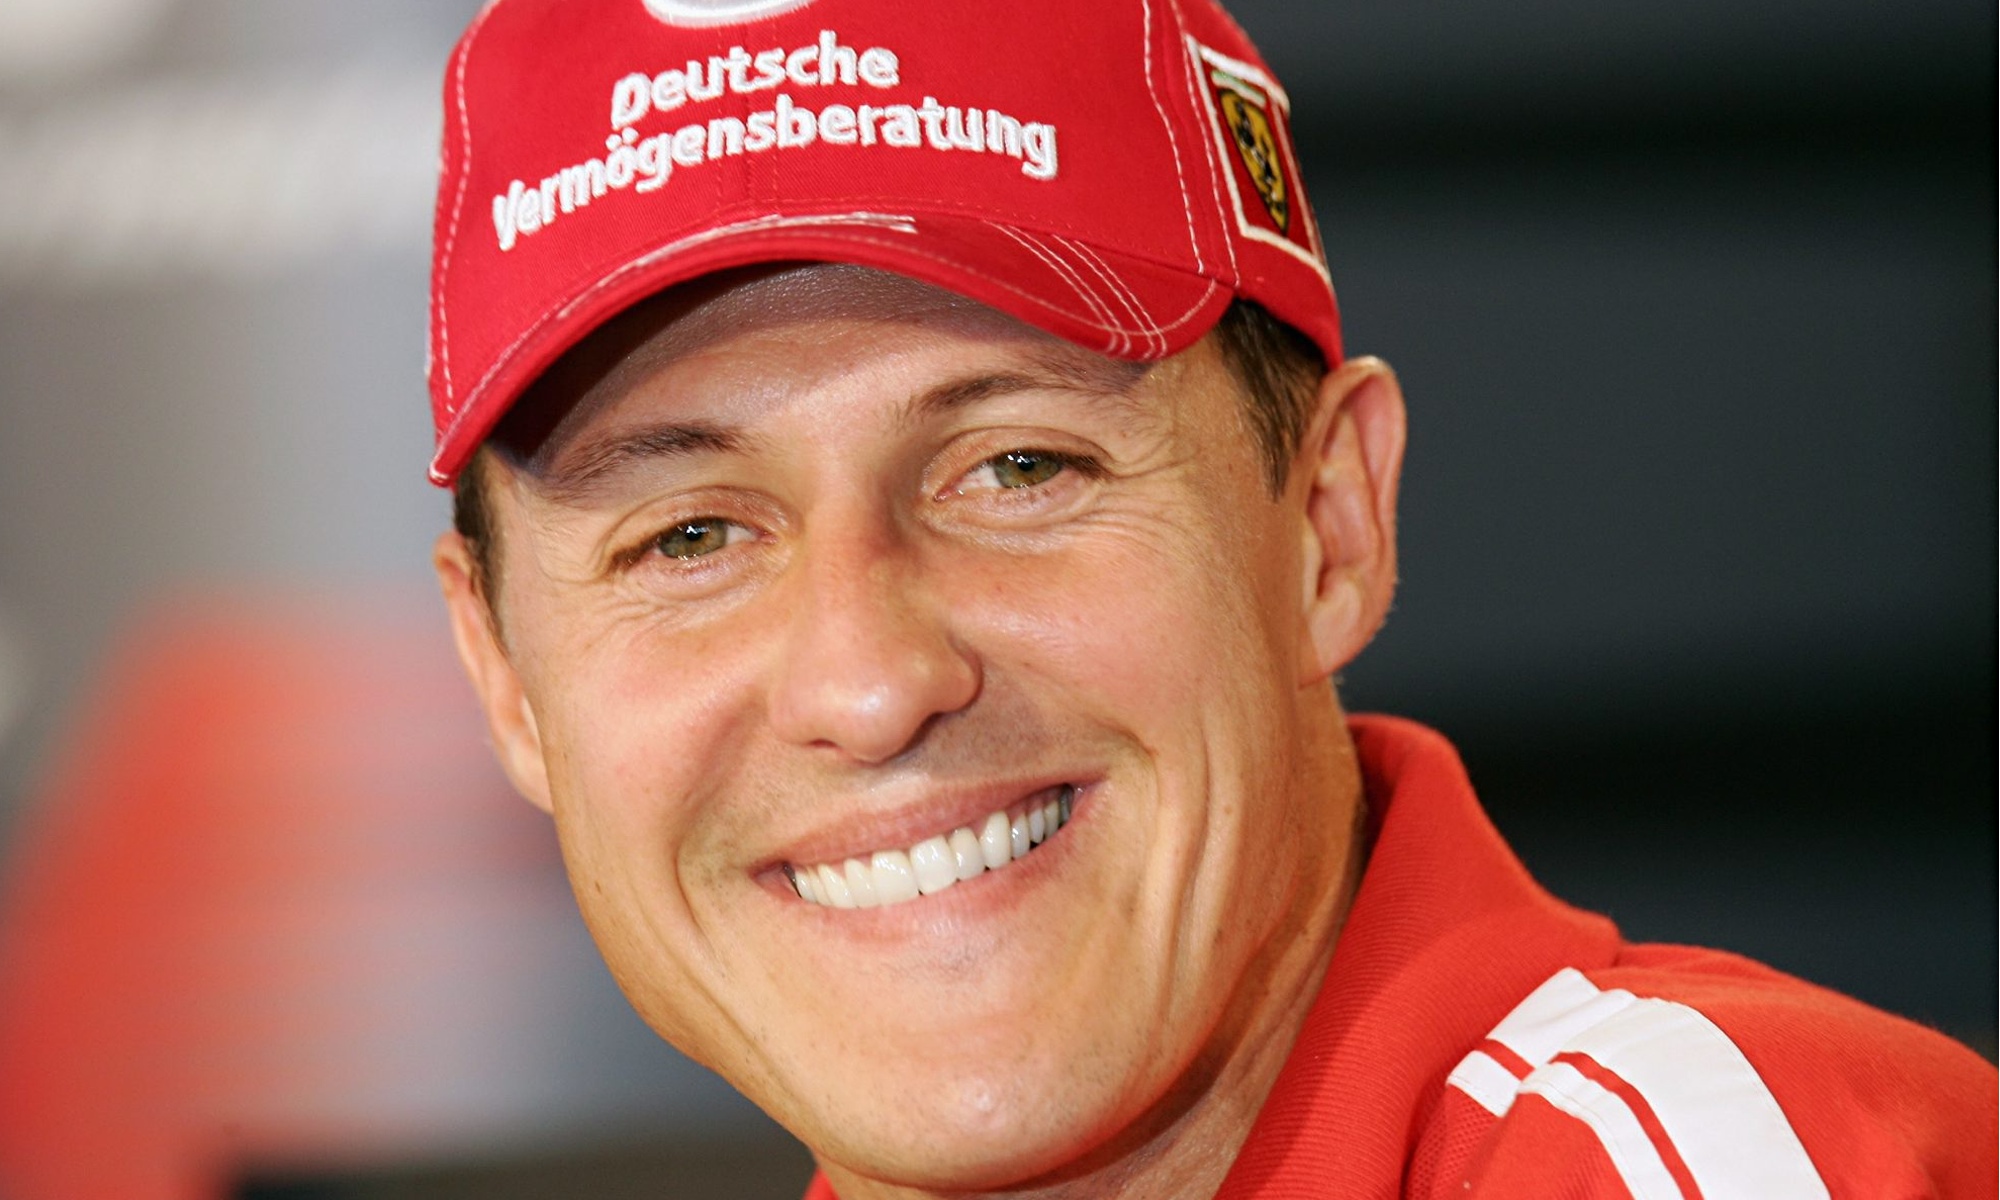 Schumacher sai do coma